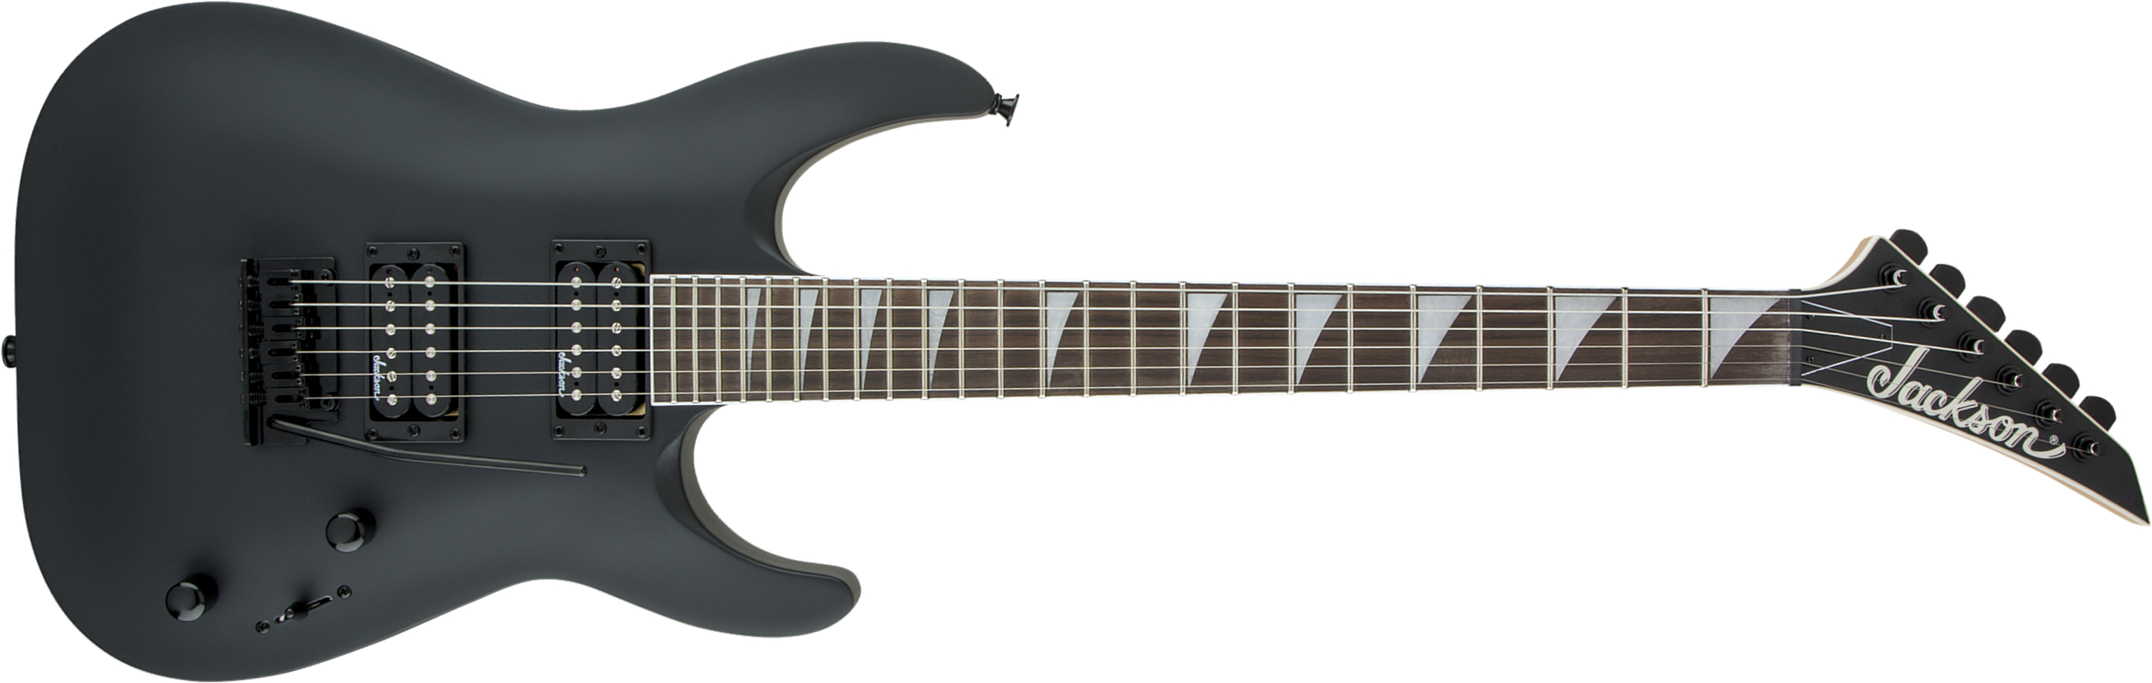 Jackson Dinky Arch Top Dka Js22 2h Trem Ama - Satin Black - E-Gitarre aus Metall - Main picture